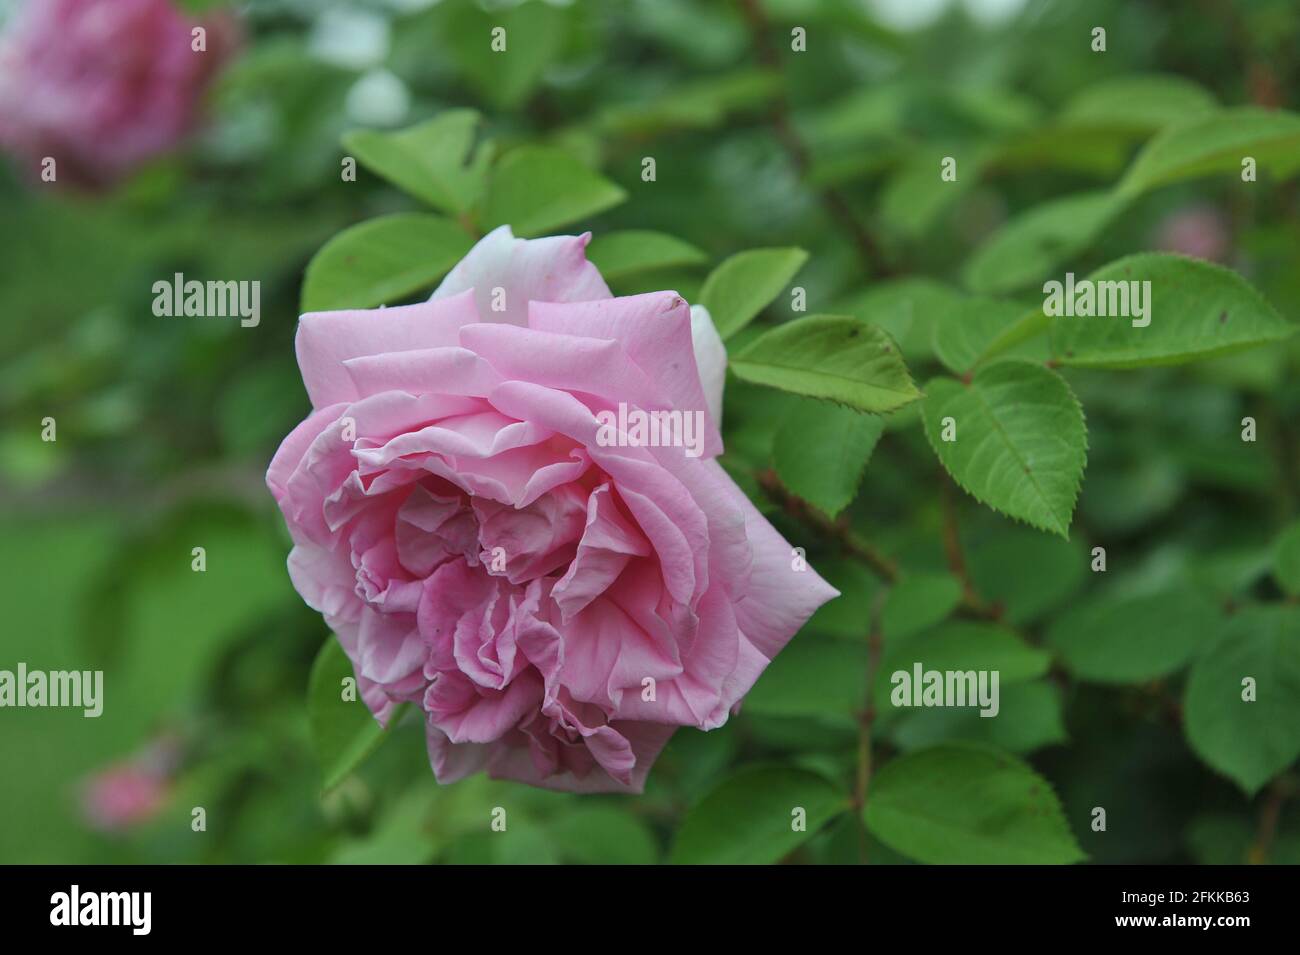 Pink Hybrid Rugosa rose (Rosa)  Conrad Ferdinand Meyer blooms in a garden in July Stock Photo